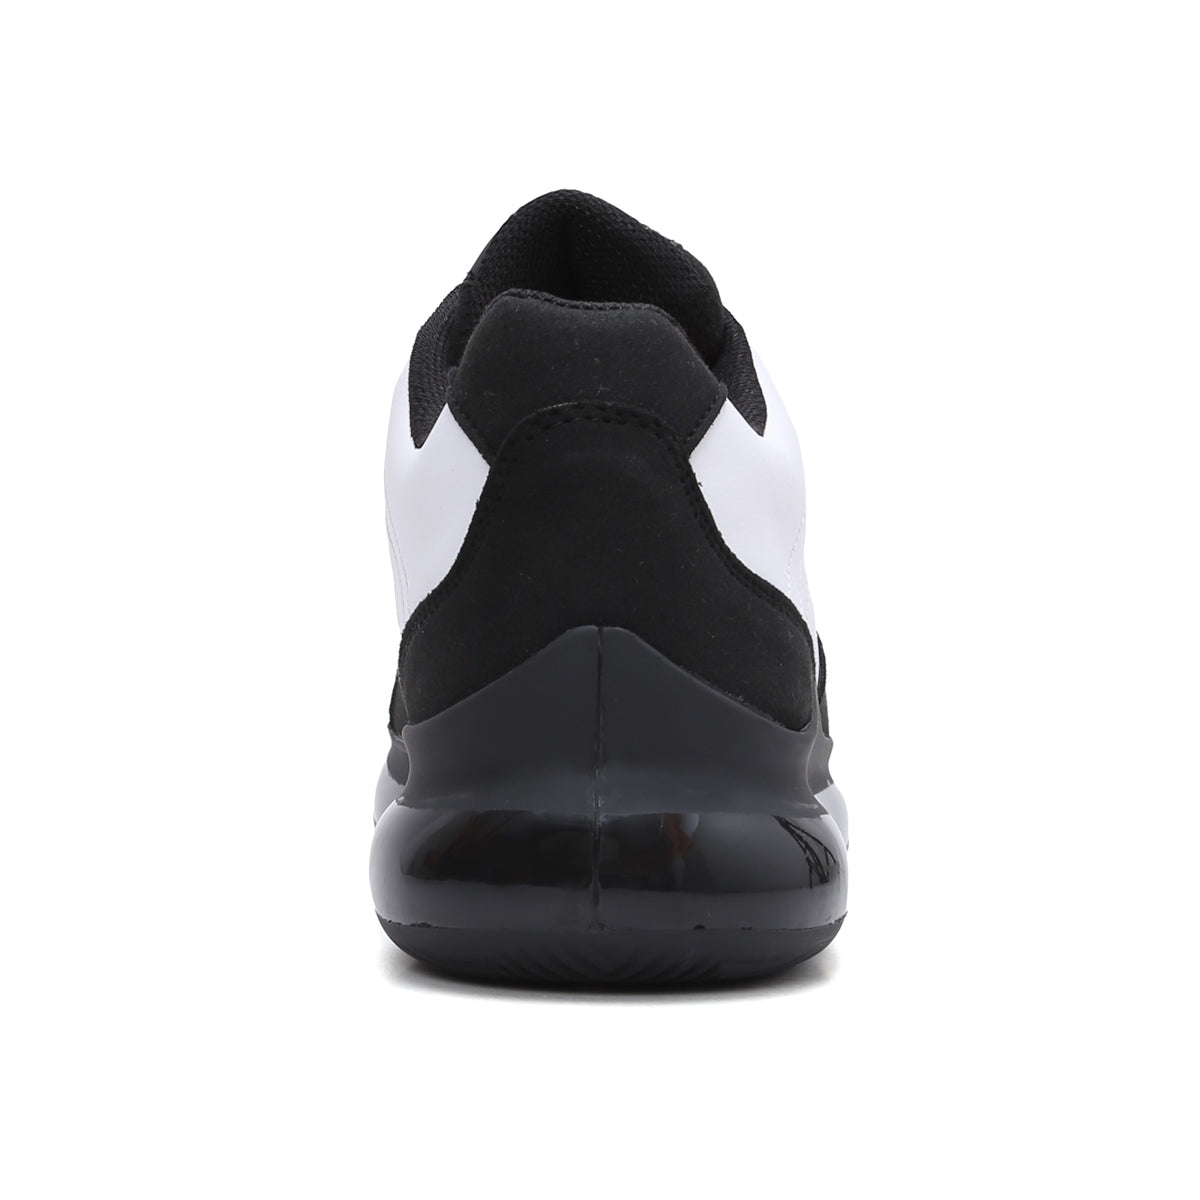 Black WhiteMen's-Casual-Bomber-Running-Stylish-Shoes-(BOMBER)